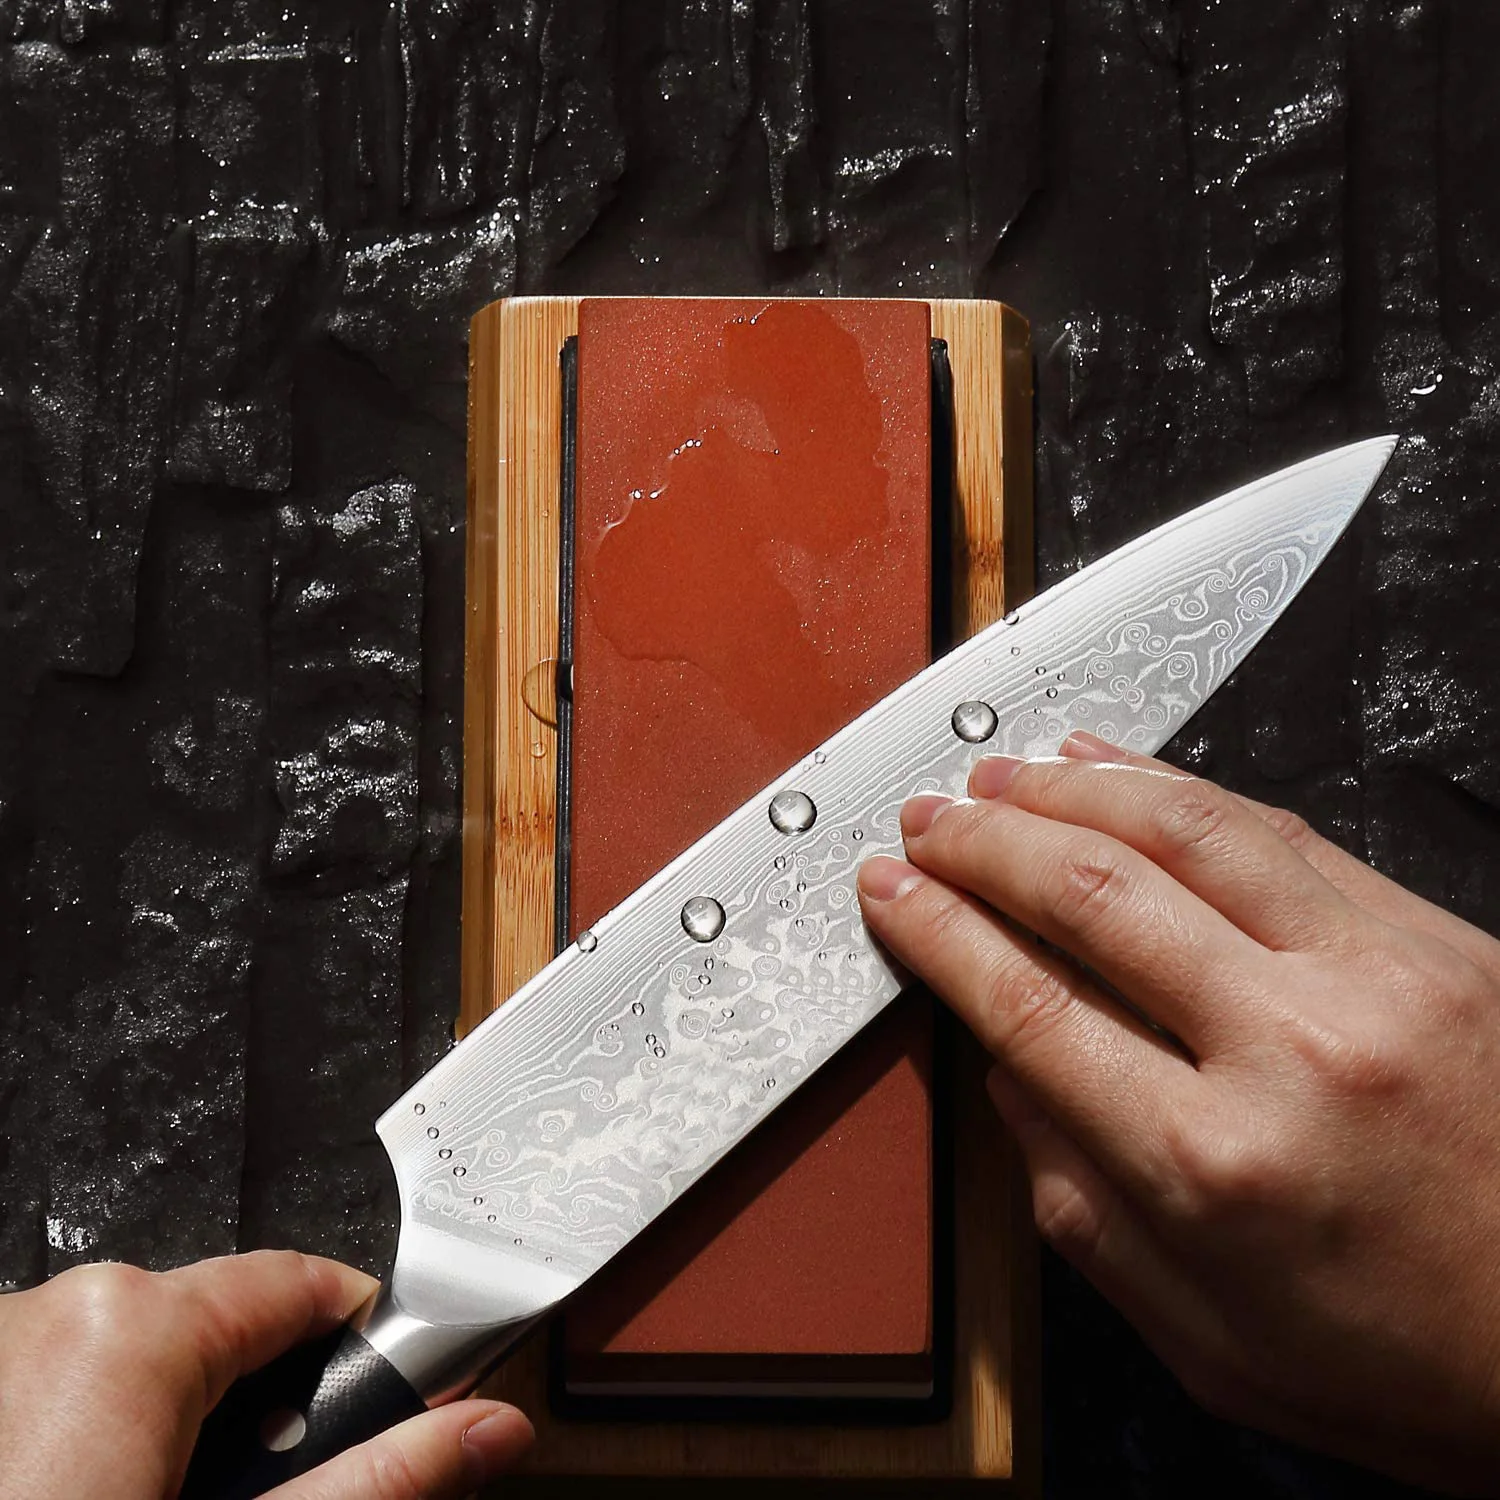 Sharp Pebble Premium Whetstone Knife Sharpening Stone 2 Side Grit -FREE  SHIPPING